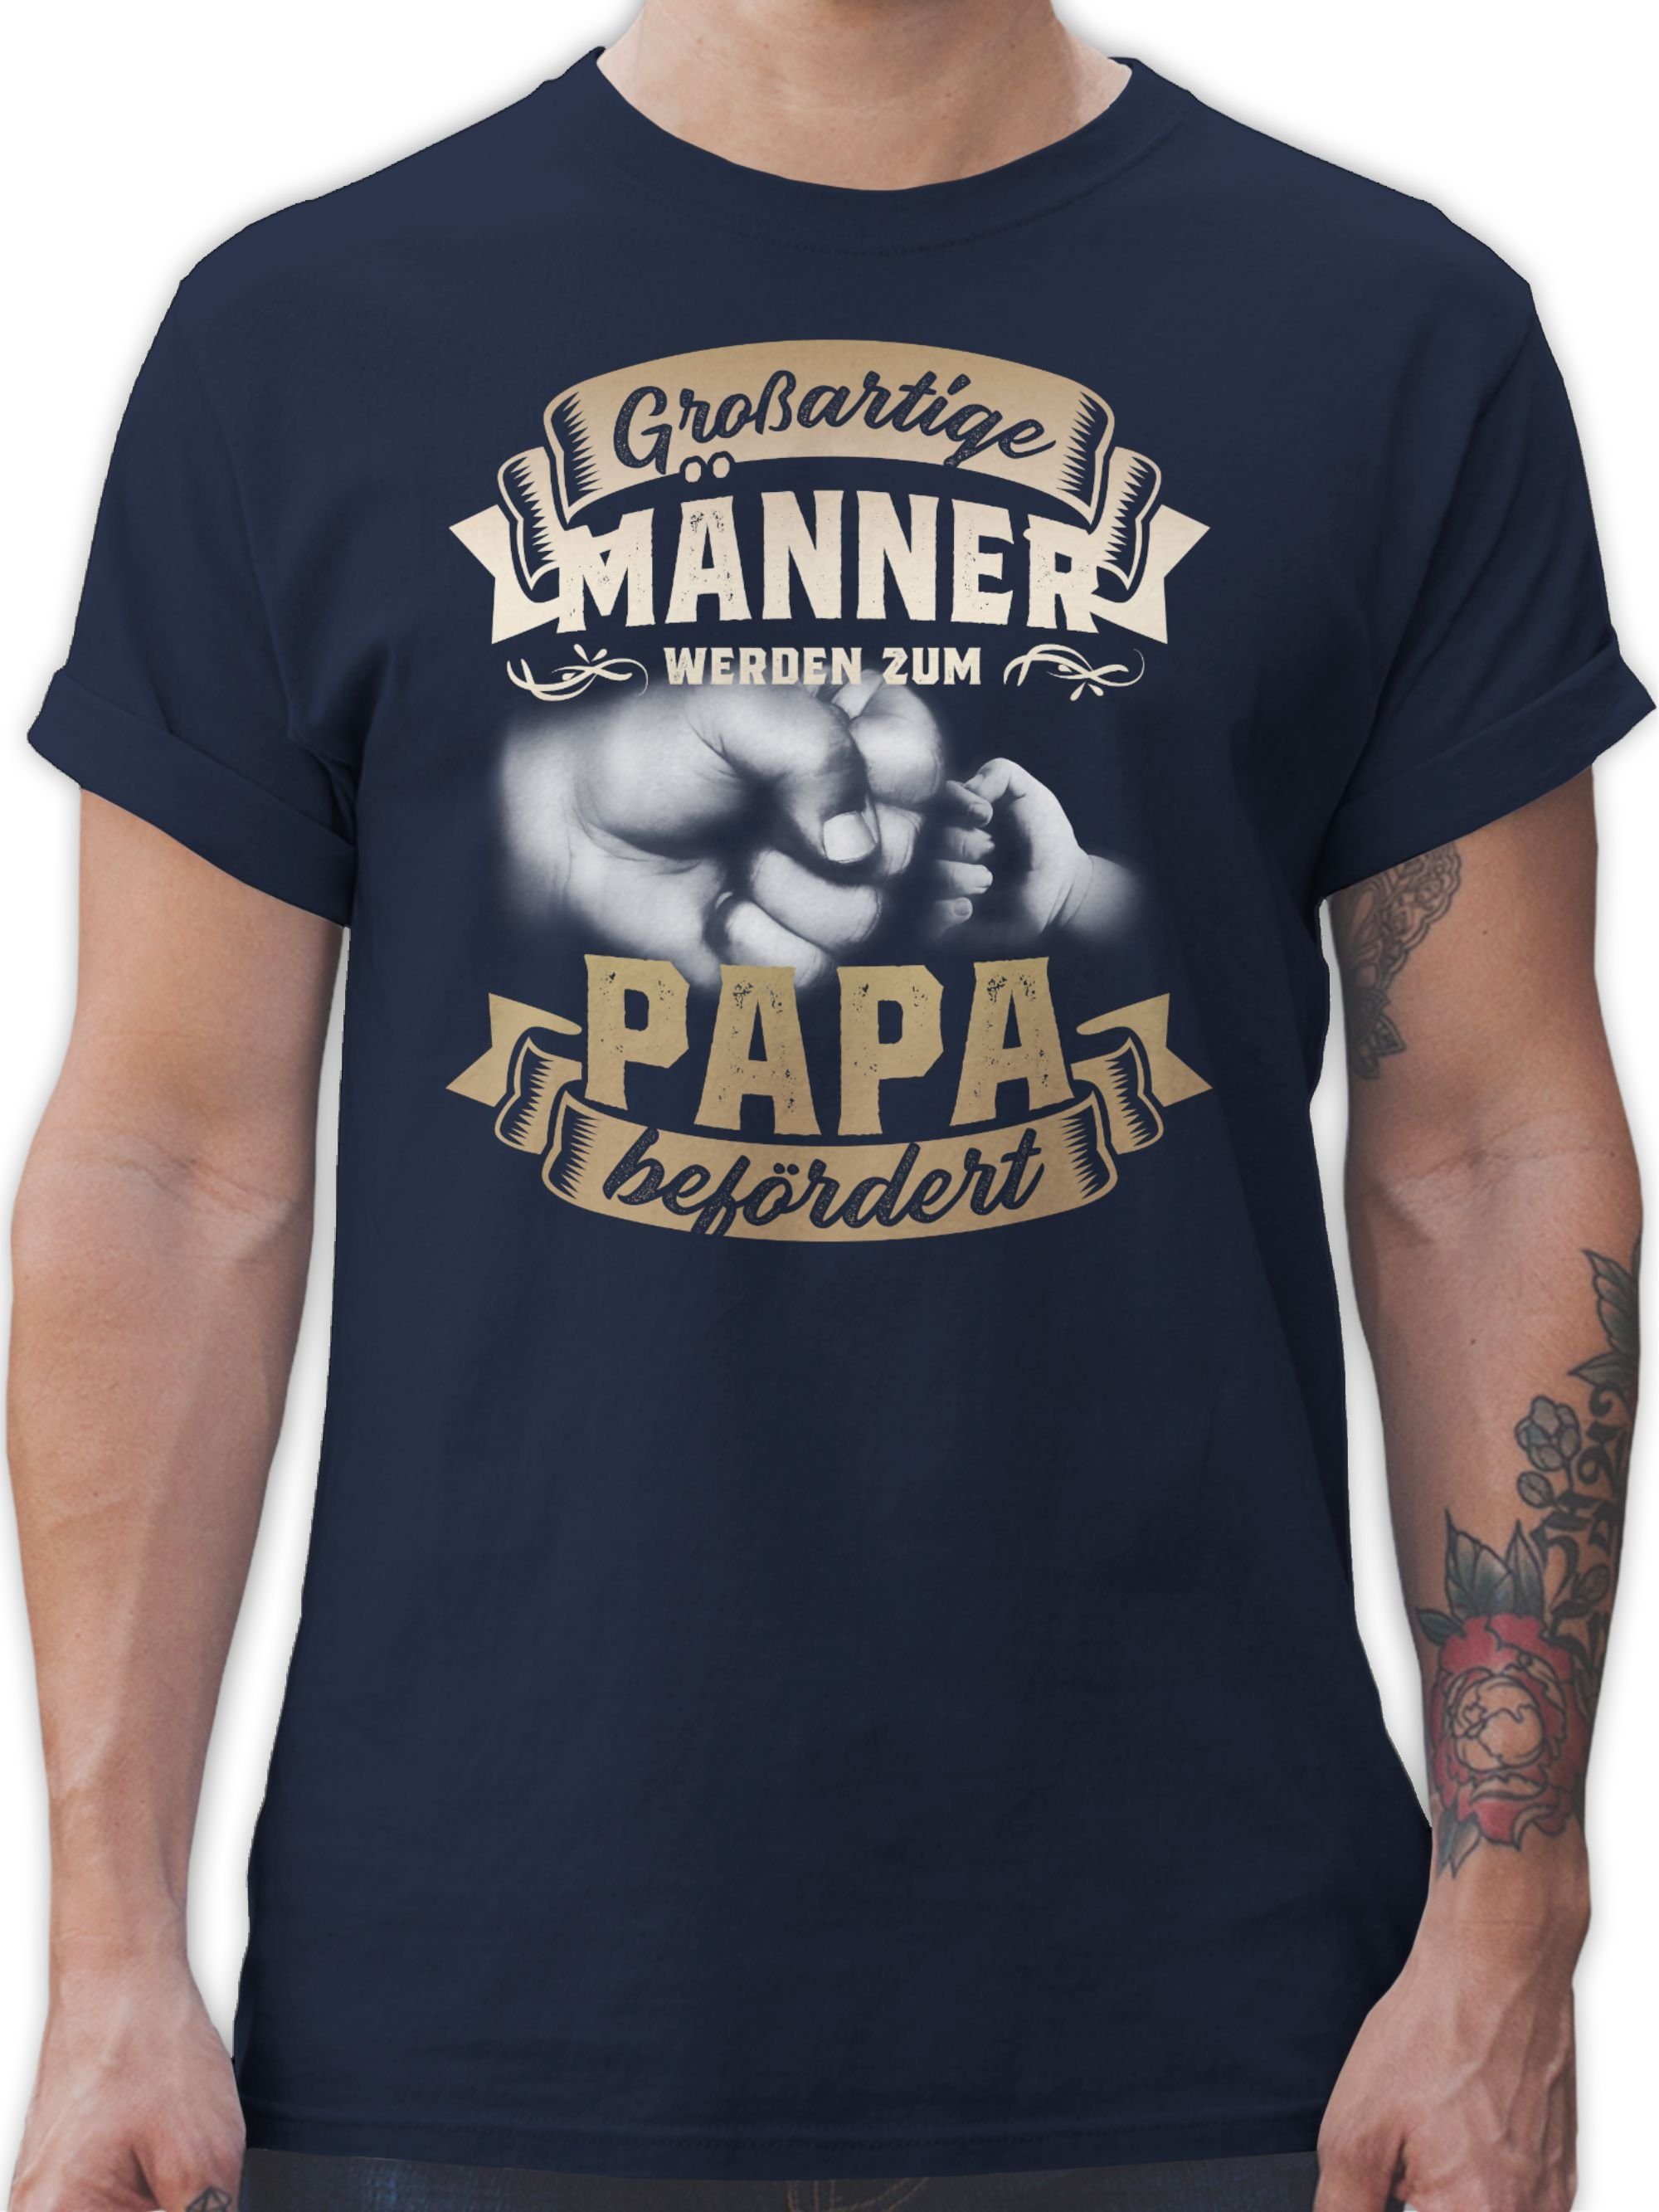 Shirtracer T-Shirt Großartige Männer werden zum Papa befördert - Geschenk Geburt Väter Vatertag Geschenk für Papa 03 Navy Blau